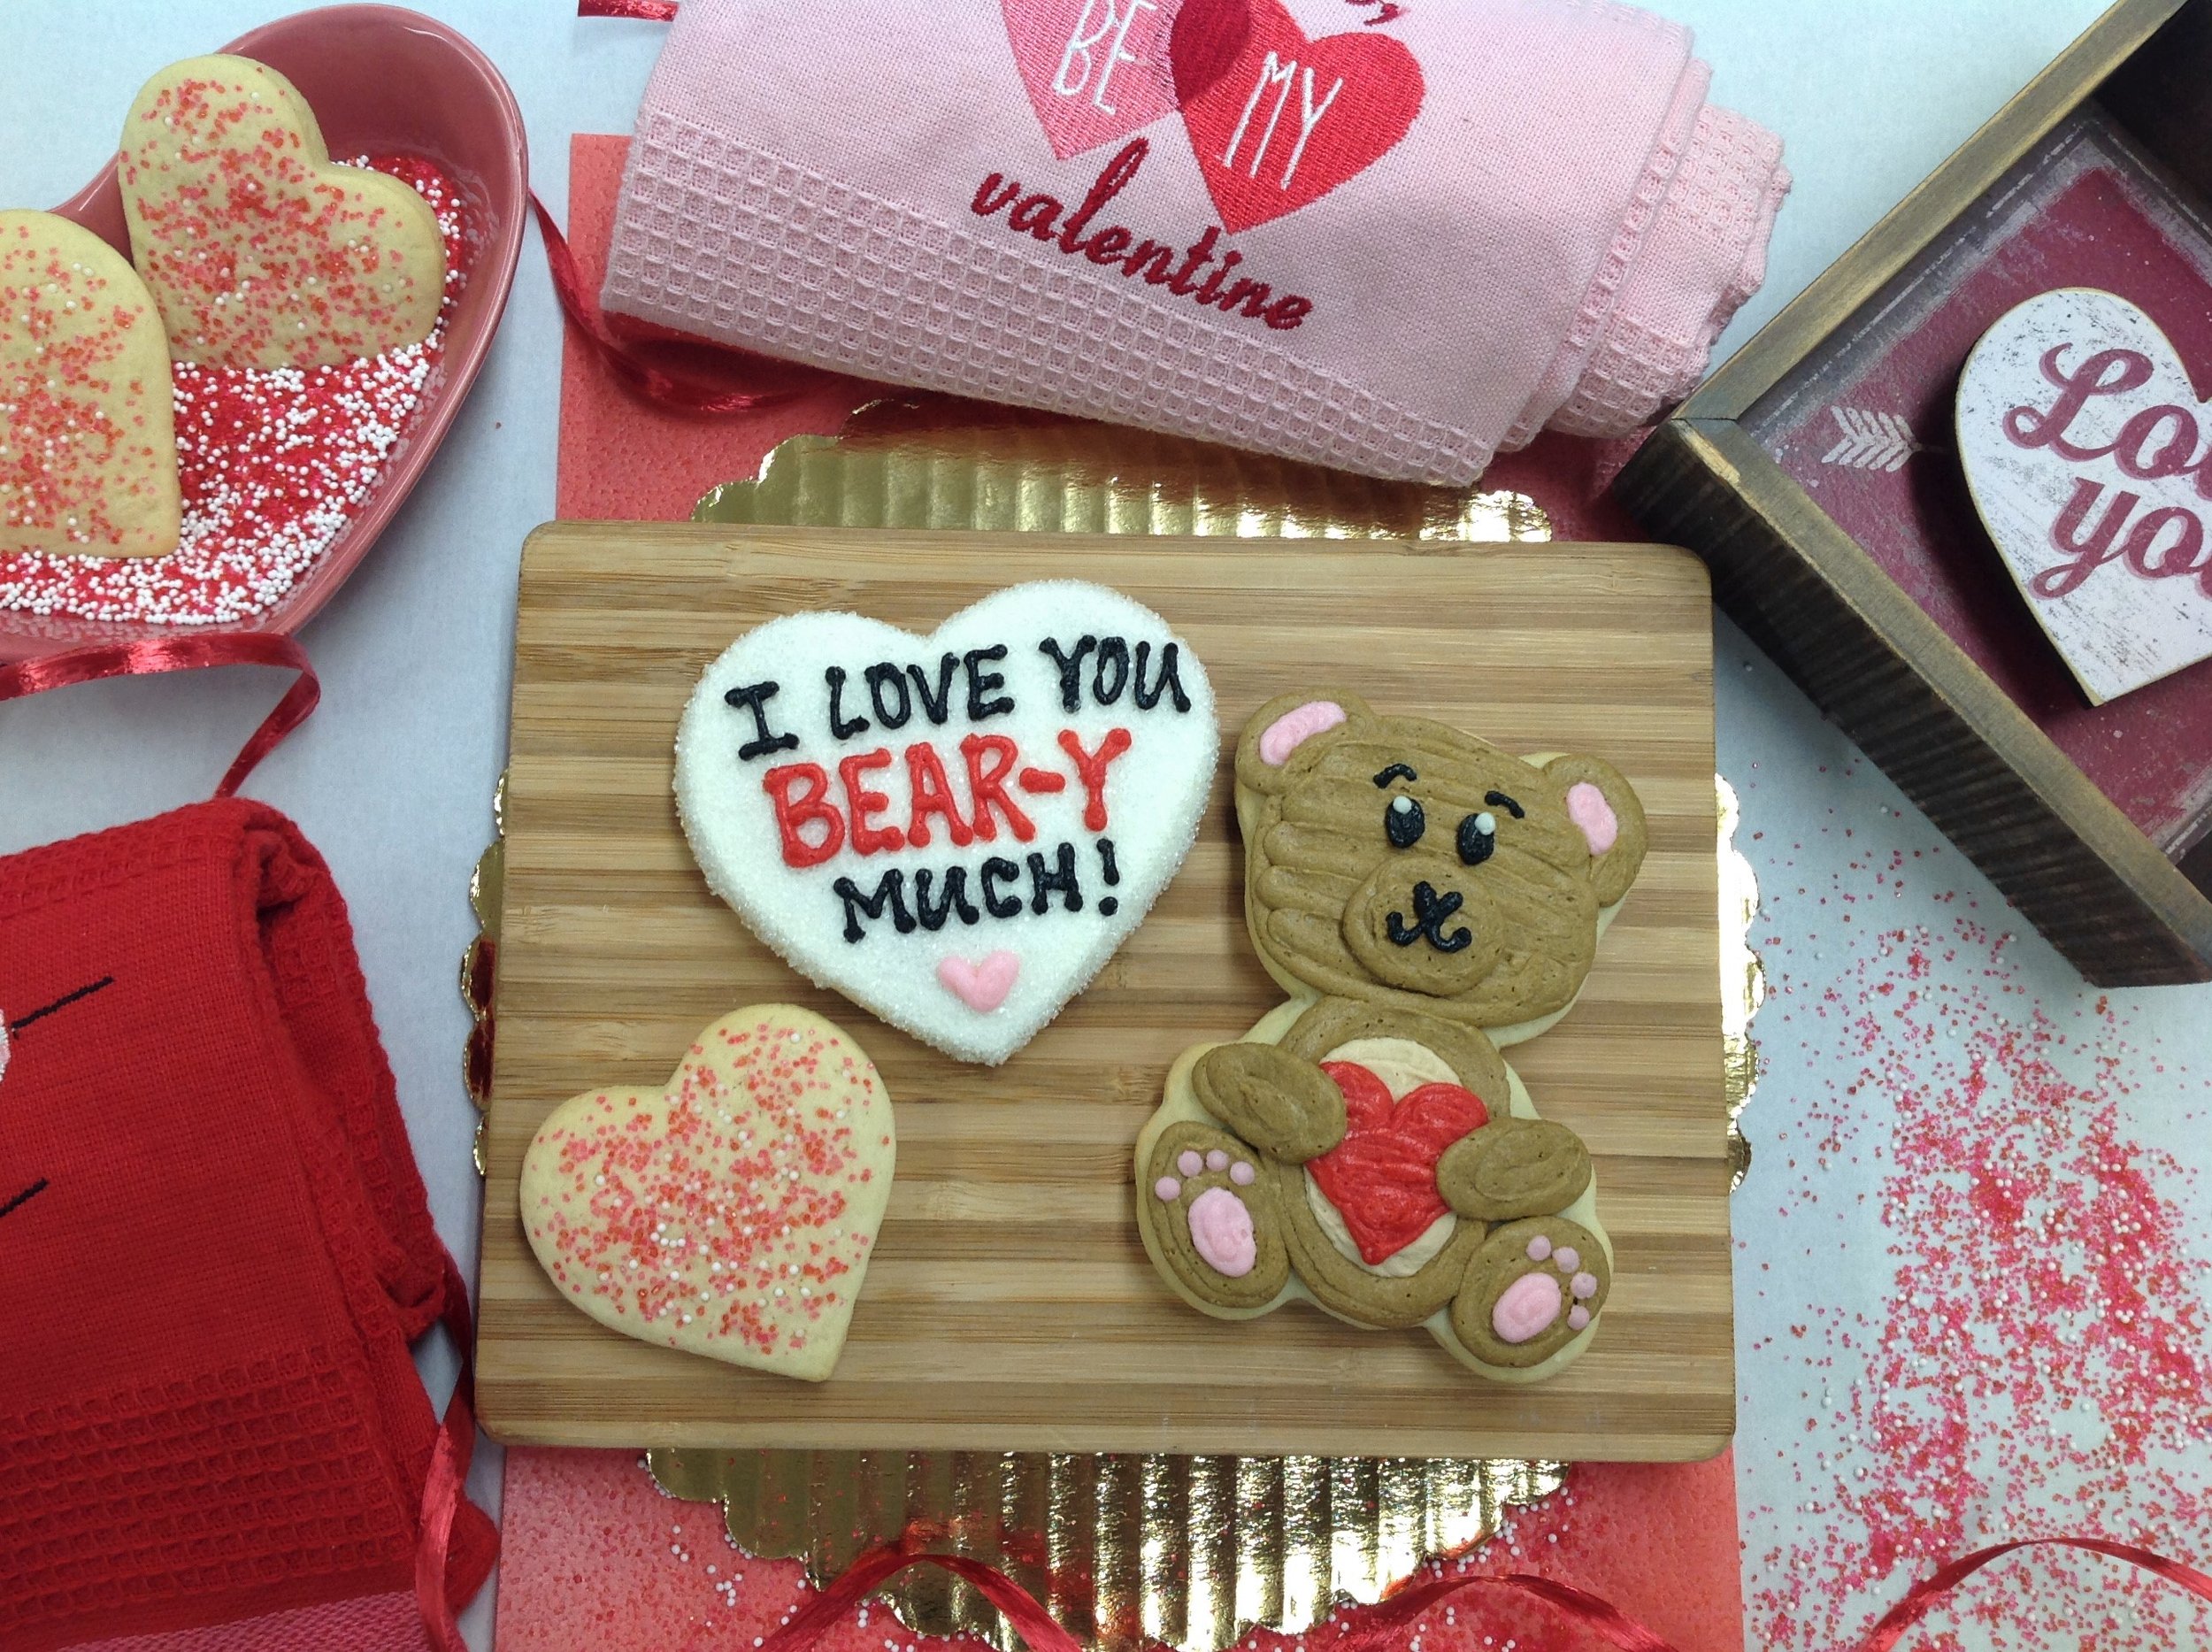 I Love You Bear-y Much Valentine Set.JPG